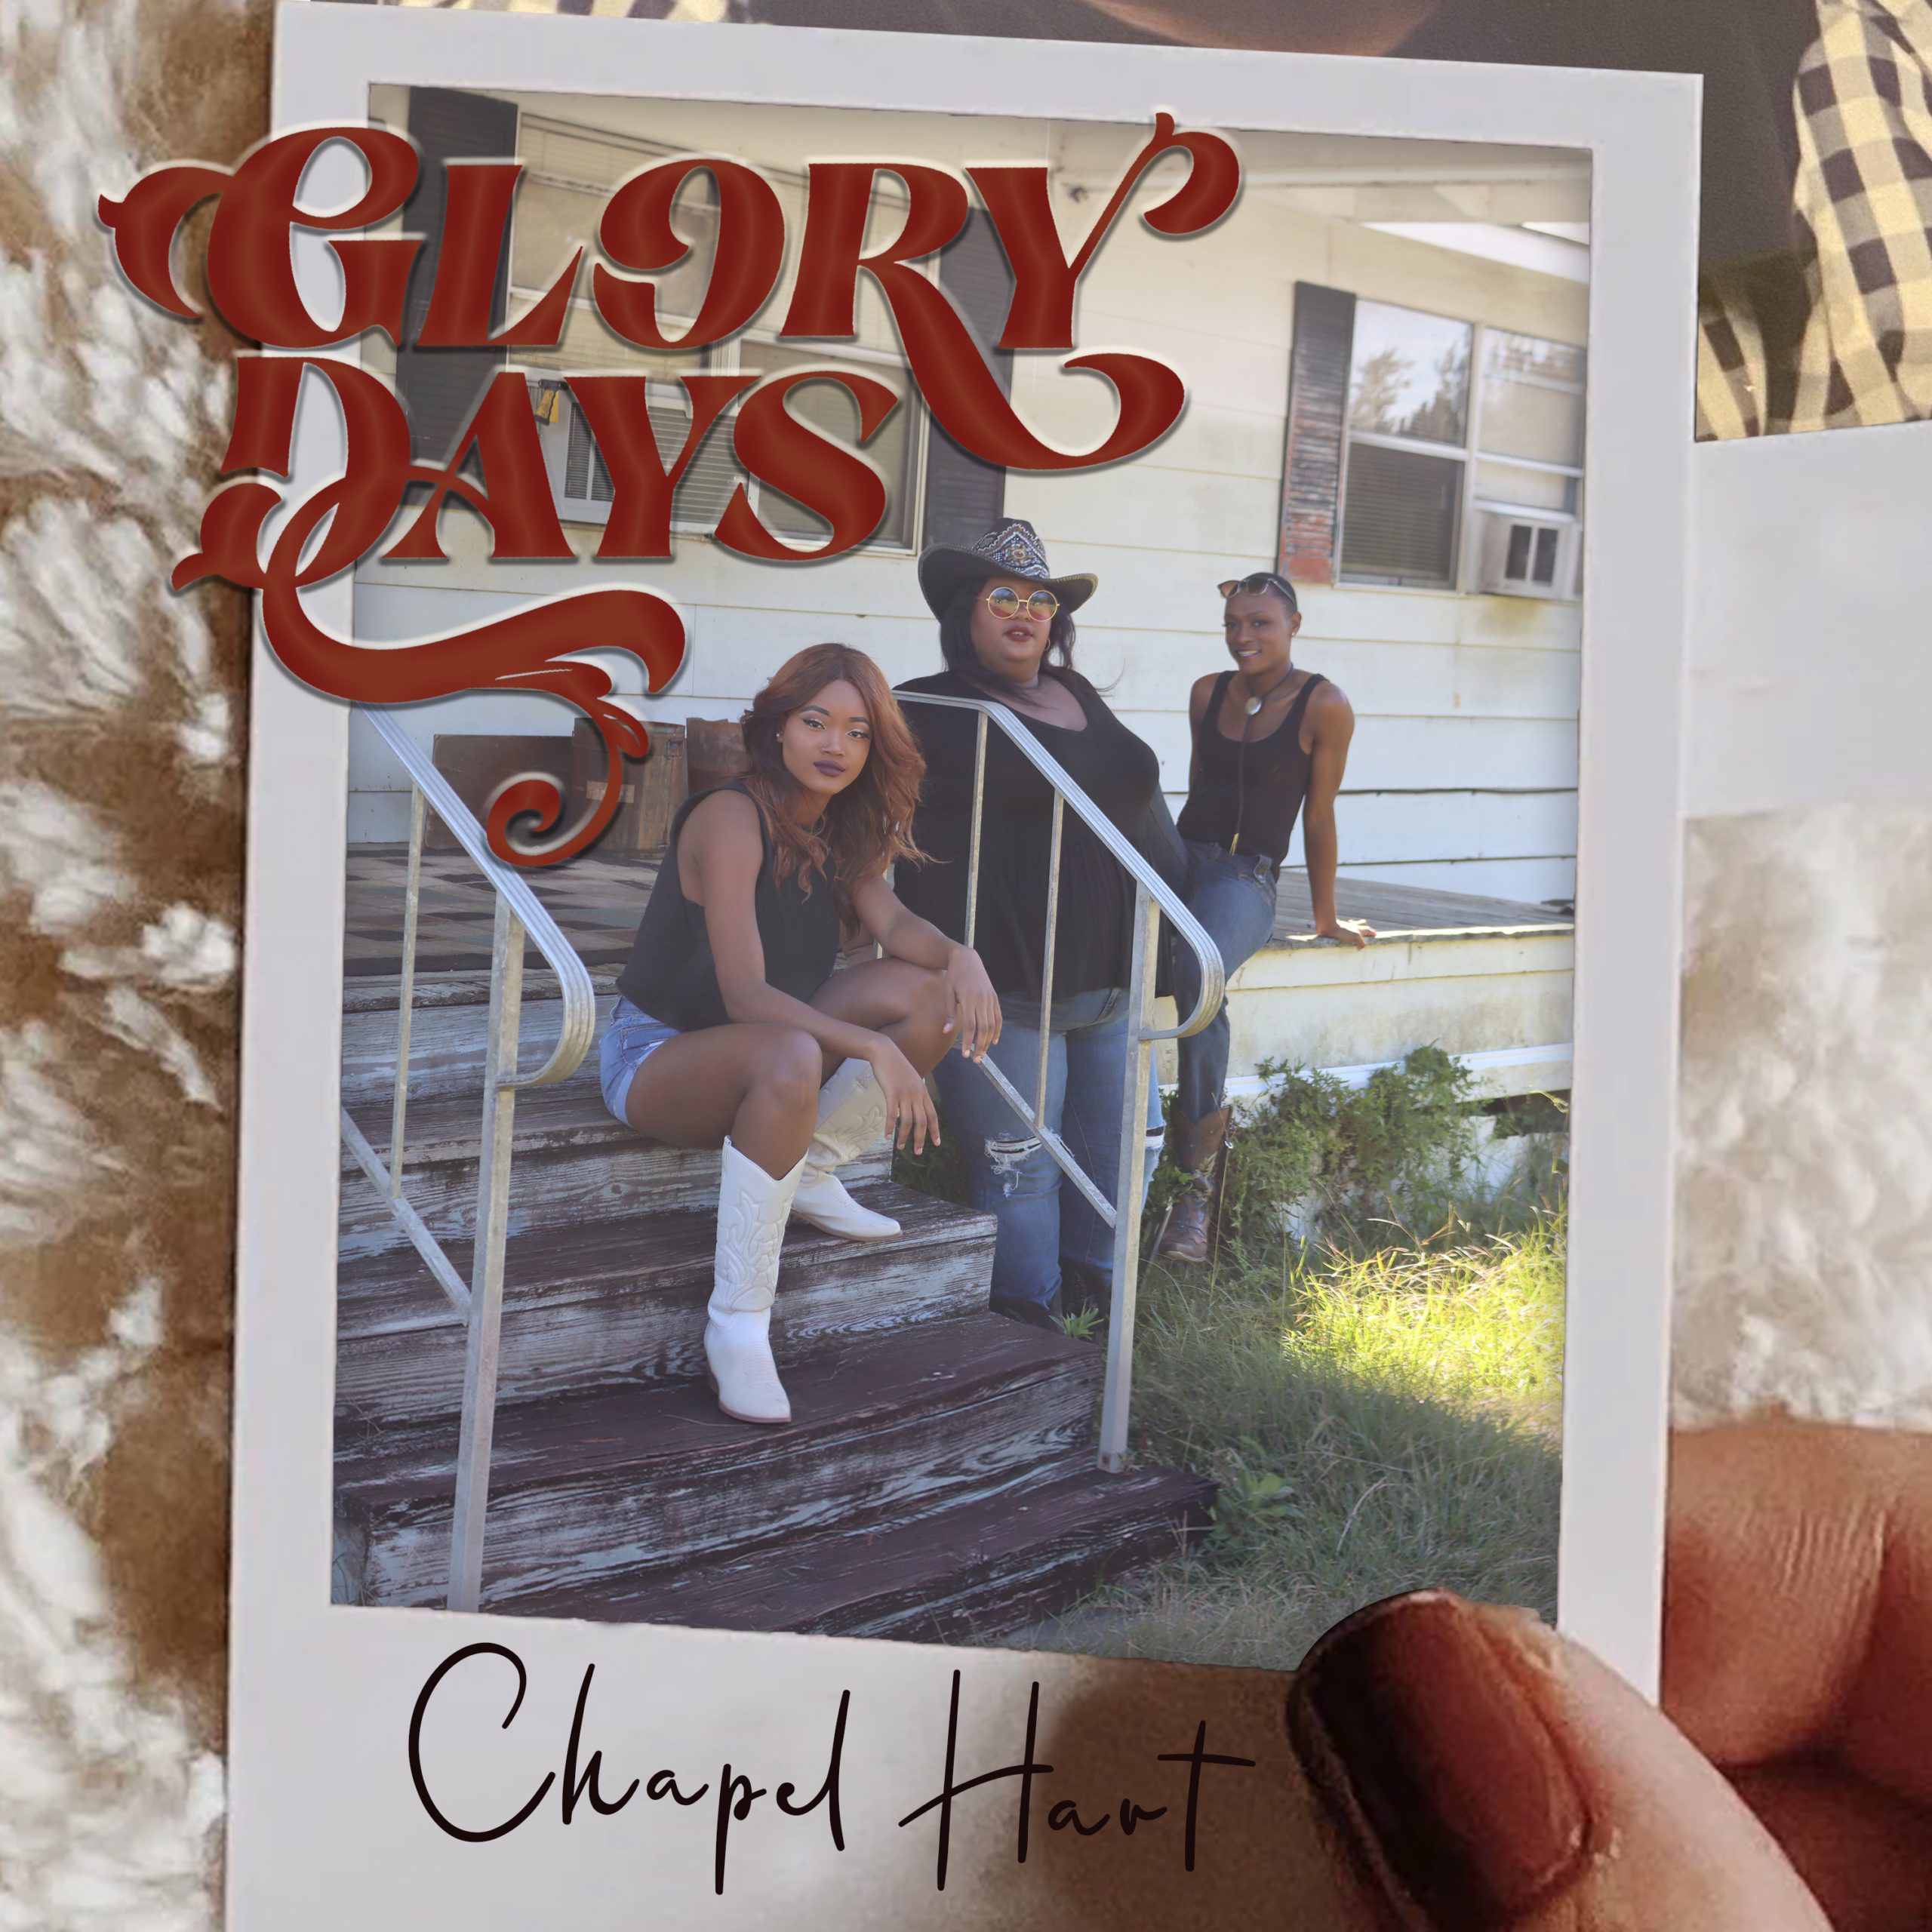 Chapel Hart Glory Days cover artwork